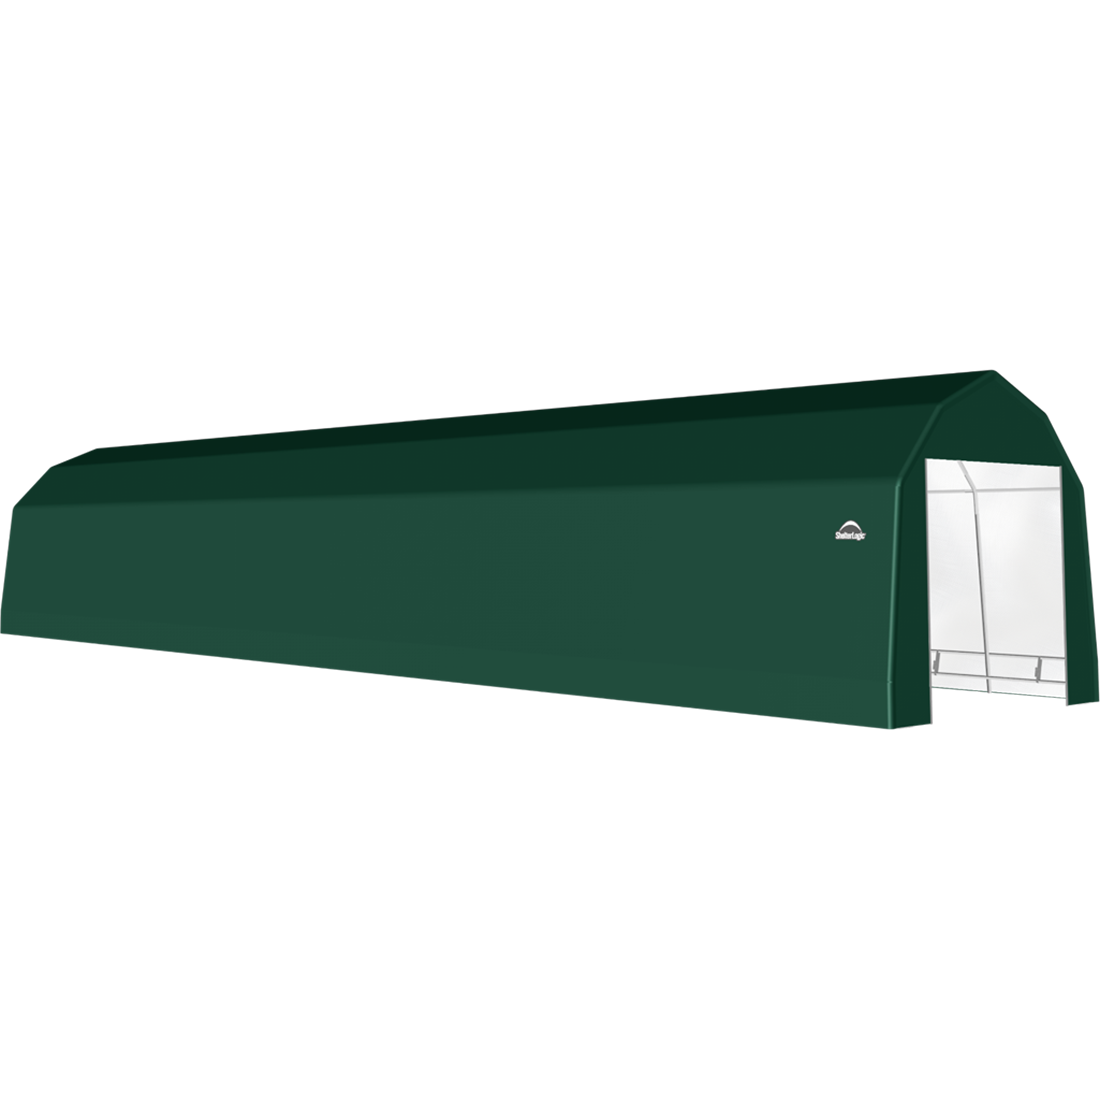 ShelterTech SP Series Barn Shelter, 12 ft. x 52 ft. x 11 ft. Heavy Duty PVC 14.5 oz. Green